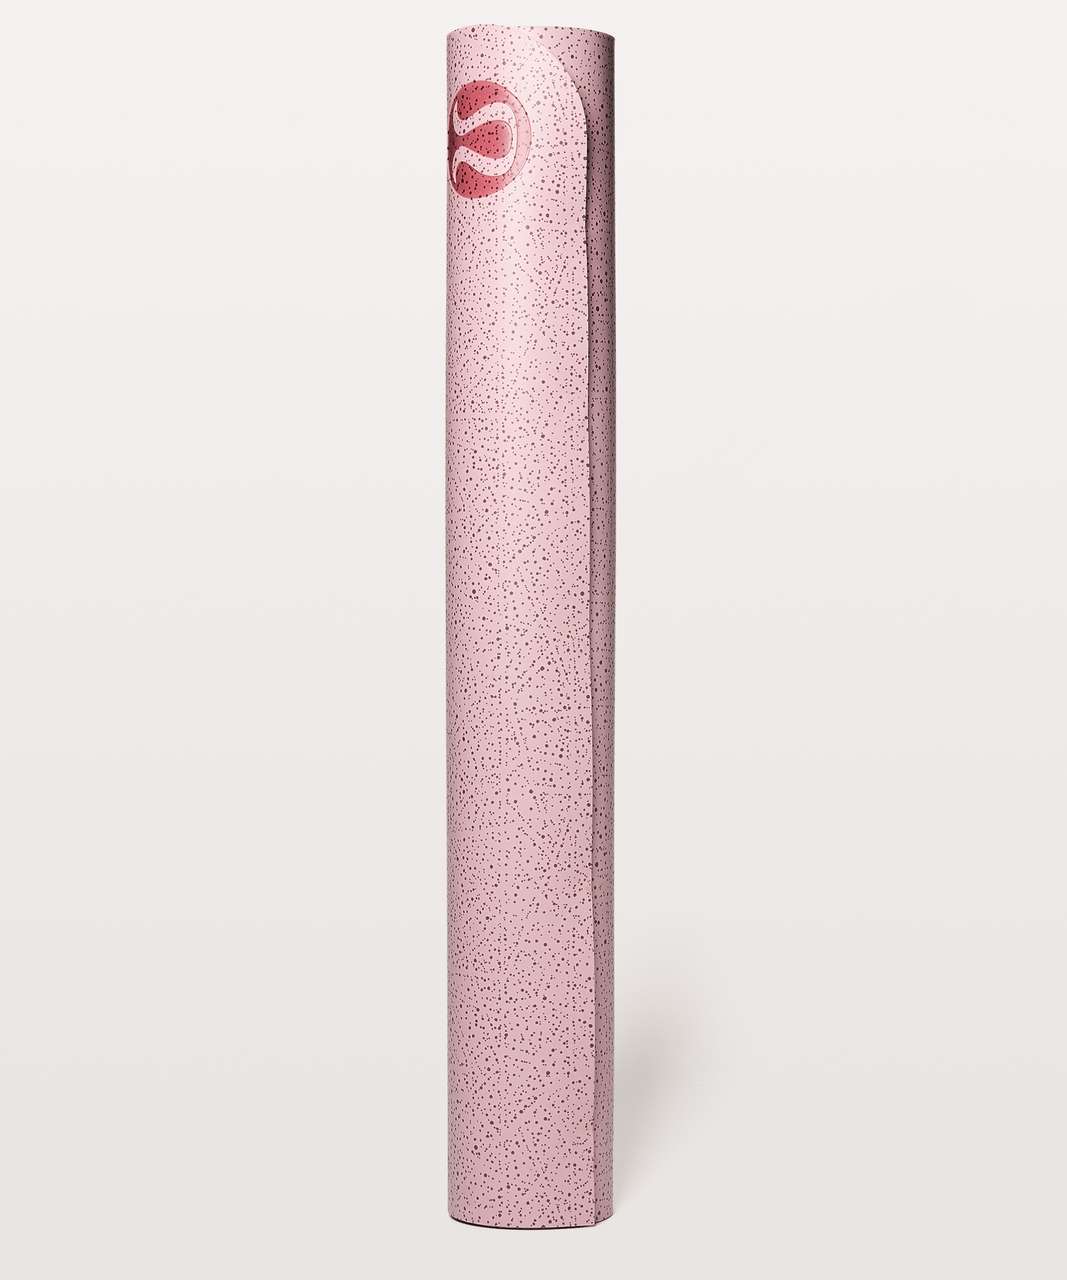 Lululemon The Reversible Mat 3mm - Night View Porcelain Pink Misty Mauve / Misty Mauve